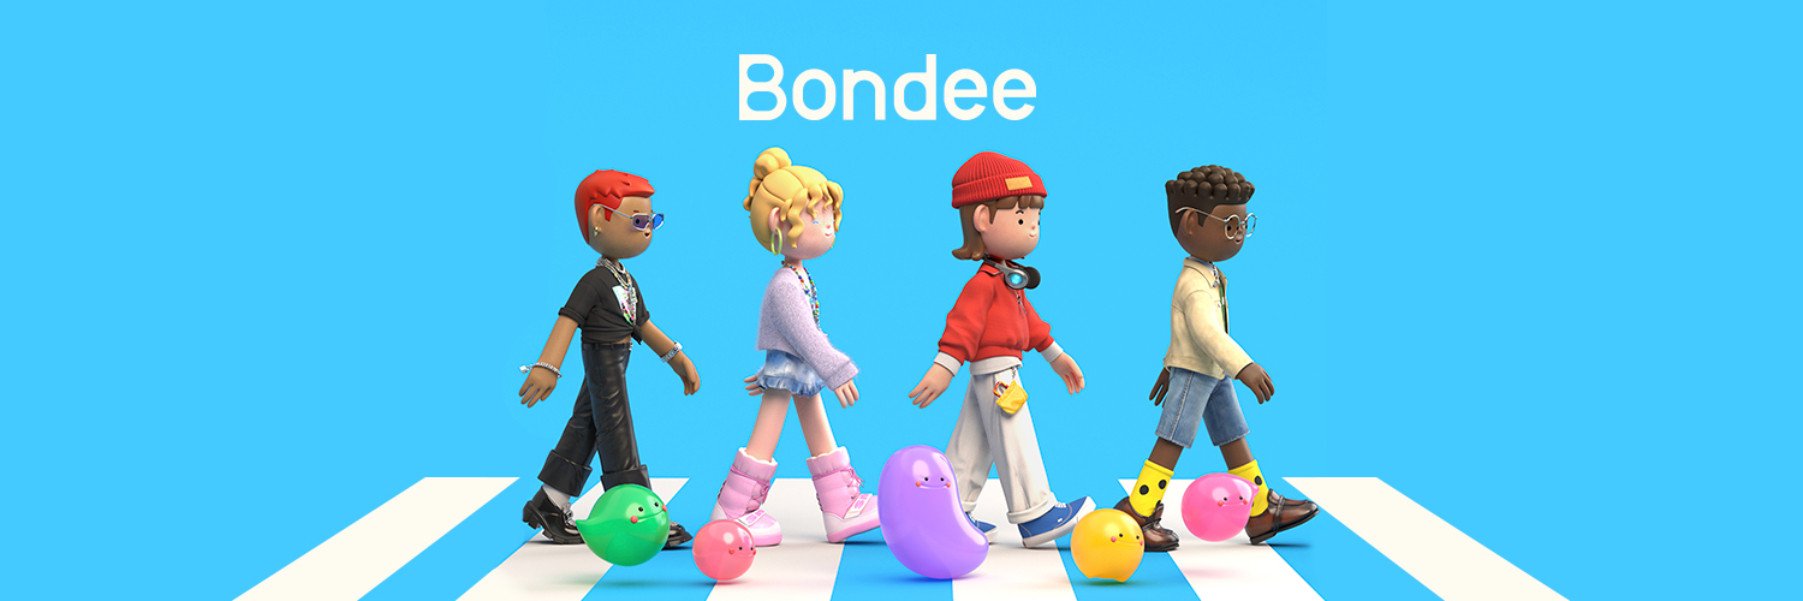 Bondee app. Photo: Facebook/Bondee ID